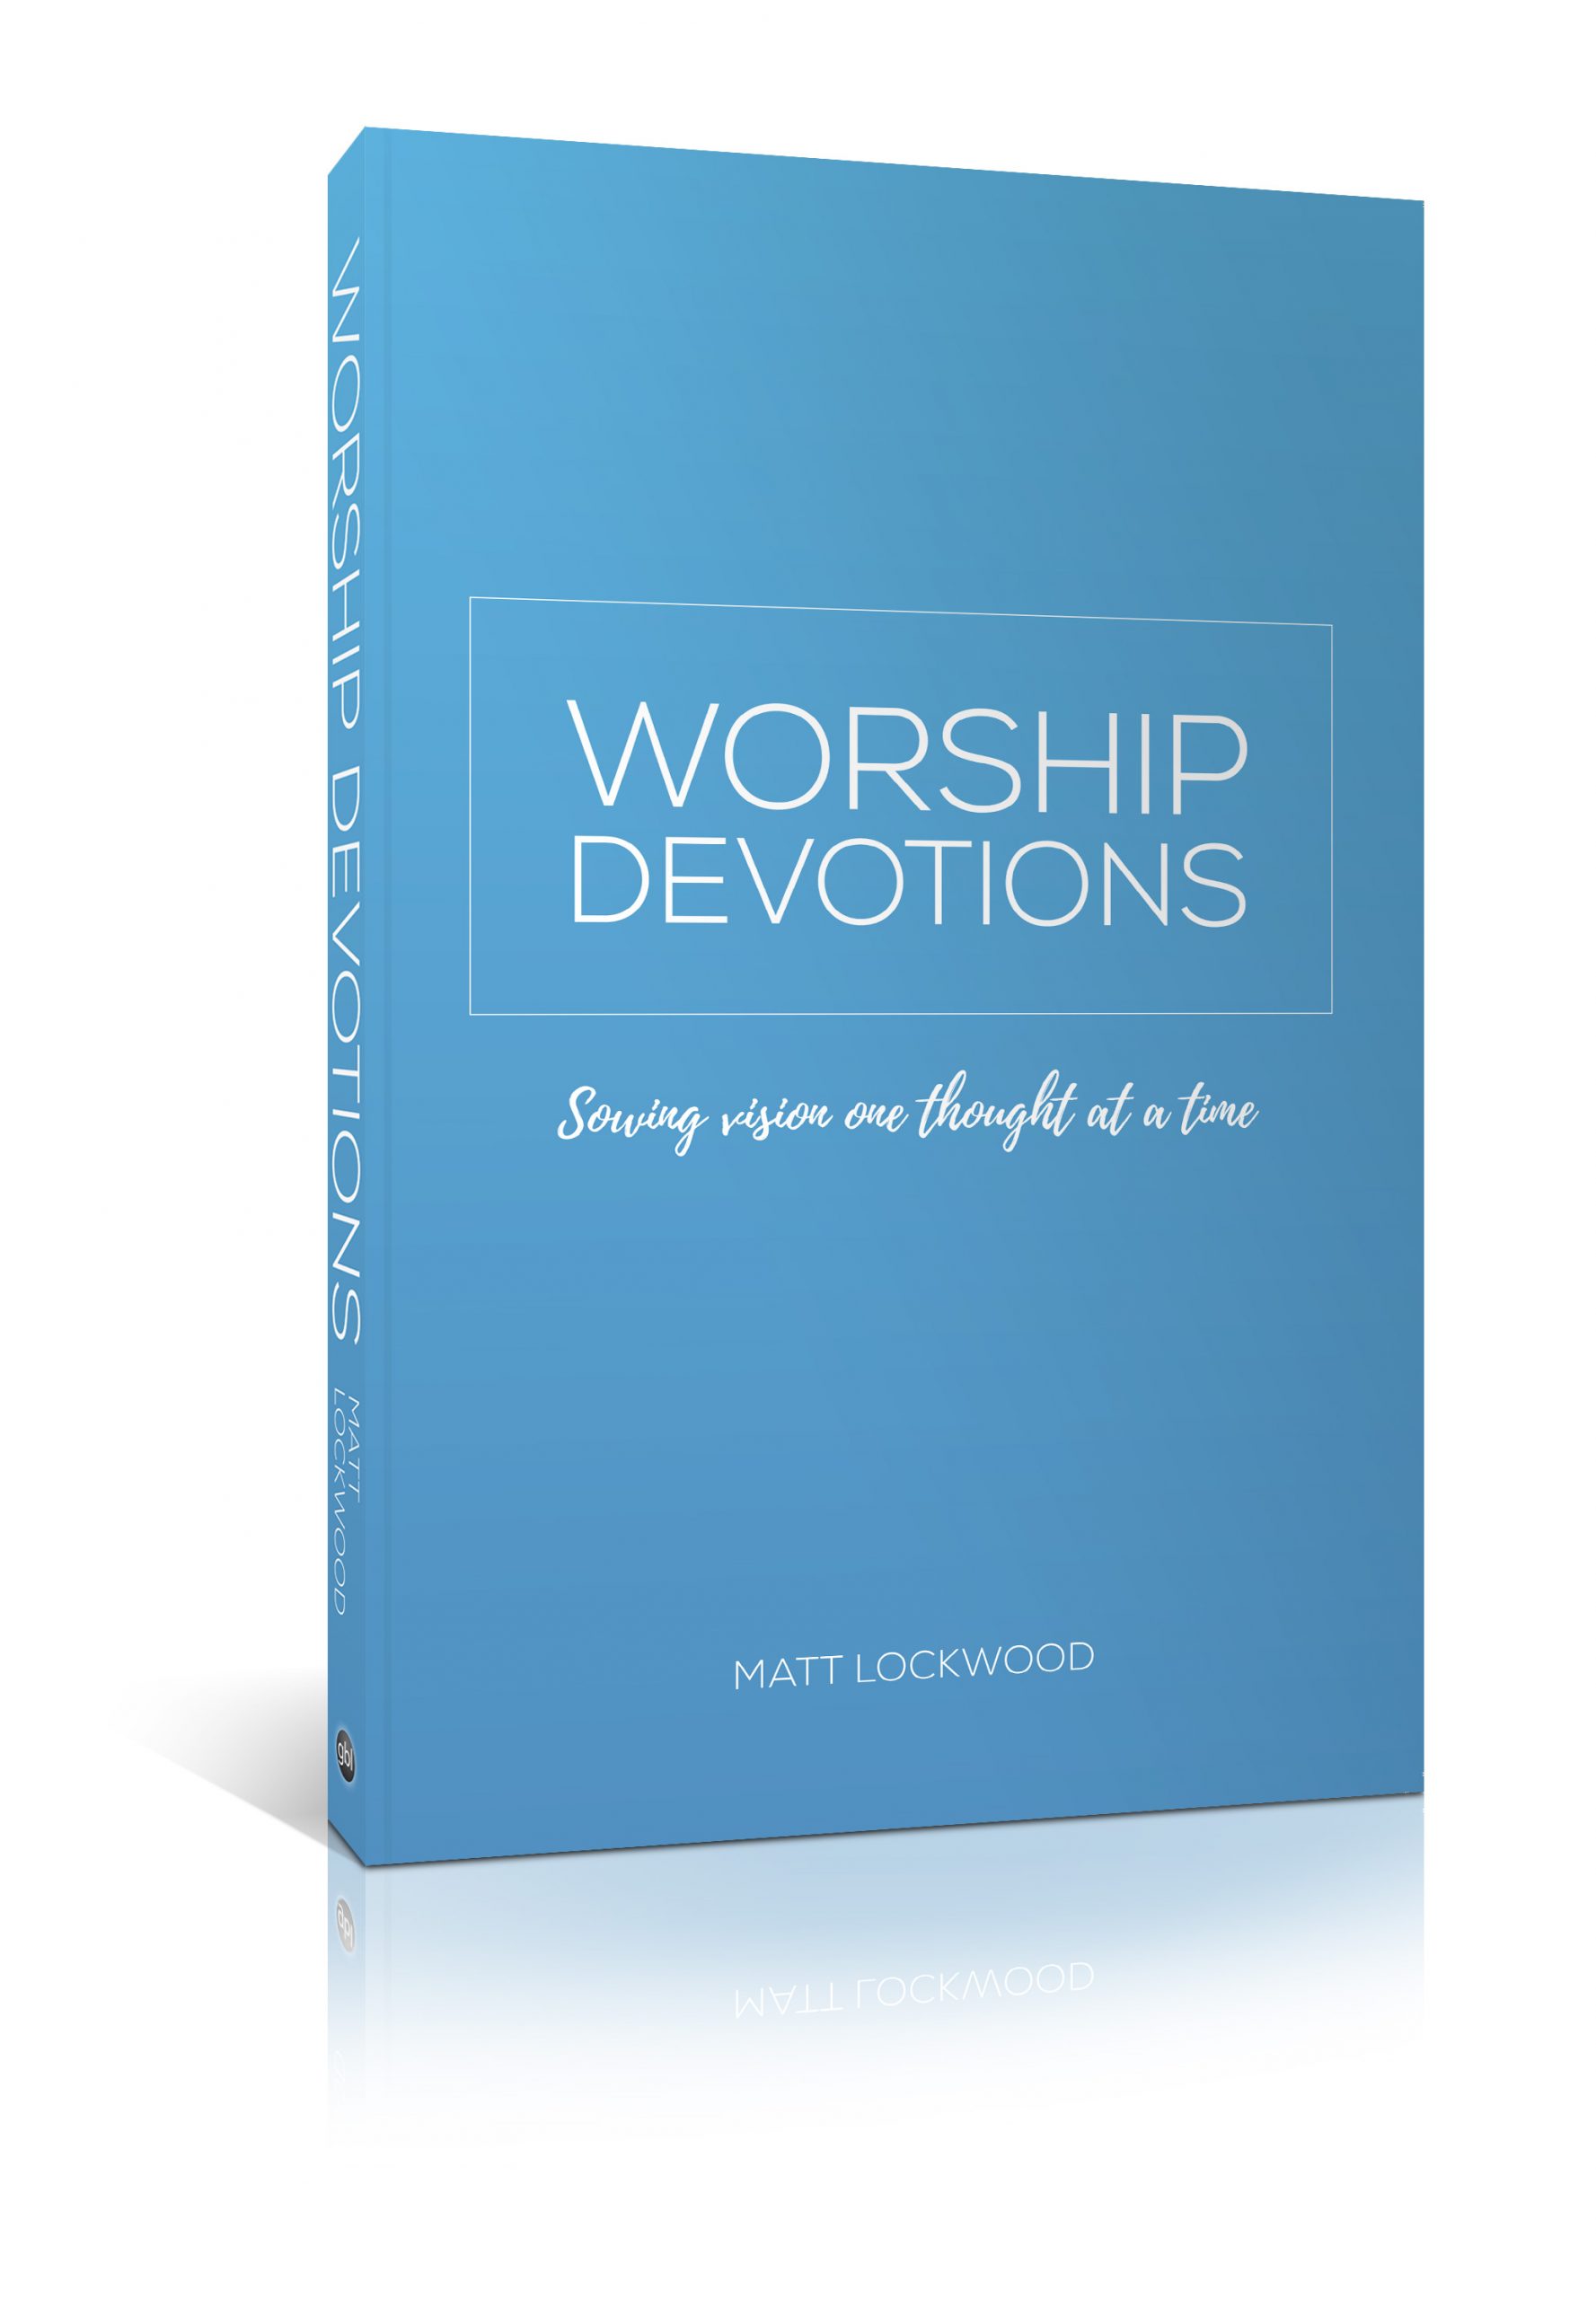 Worship Devotions, by Matt Lockwood